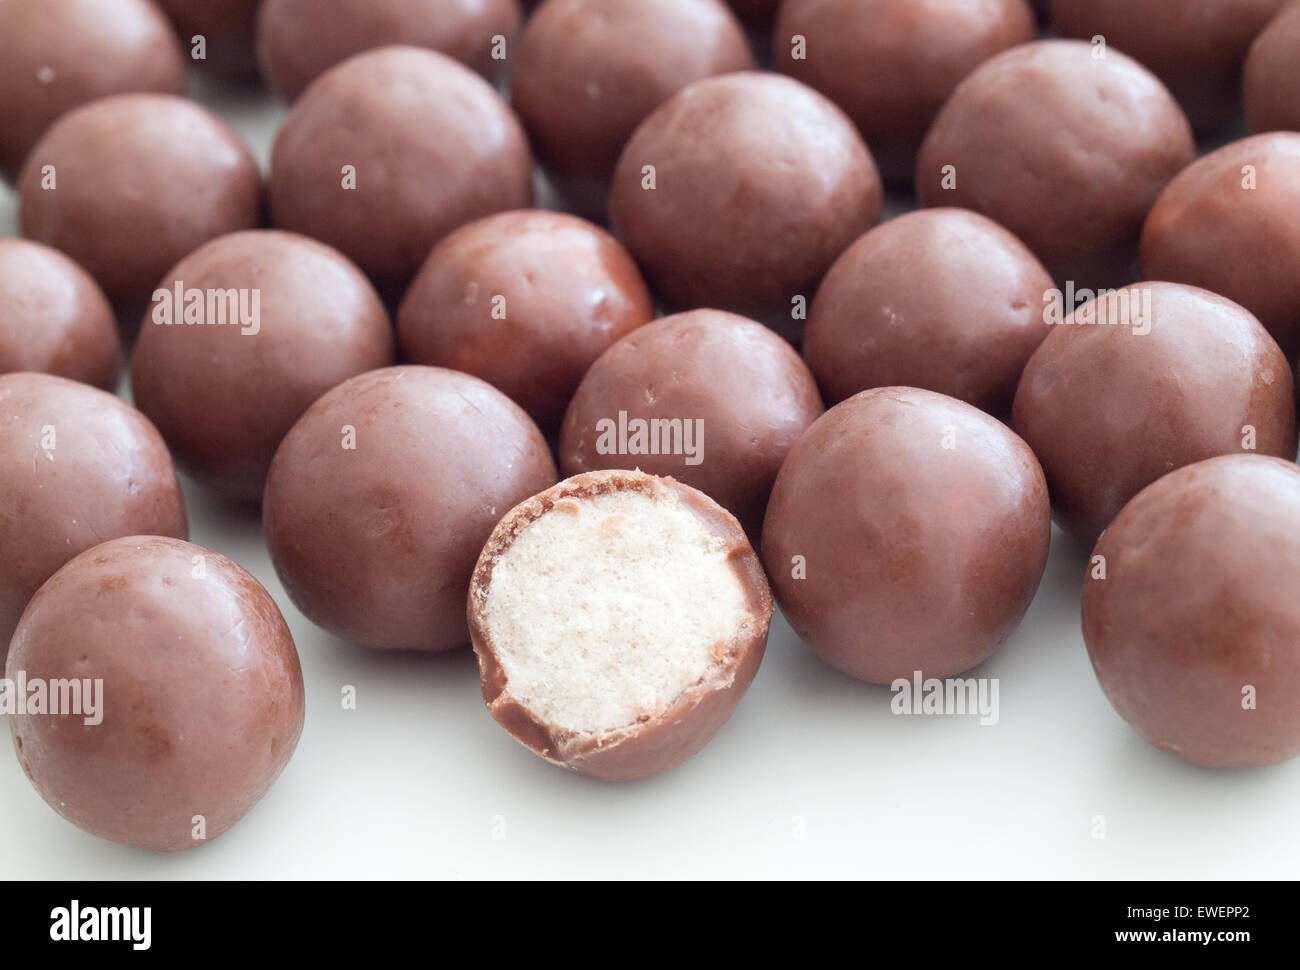 Closeup Of Mms Milk Chocolatecrispy Candies Stock Photo - Download